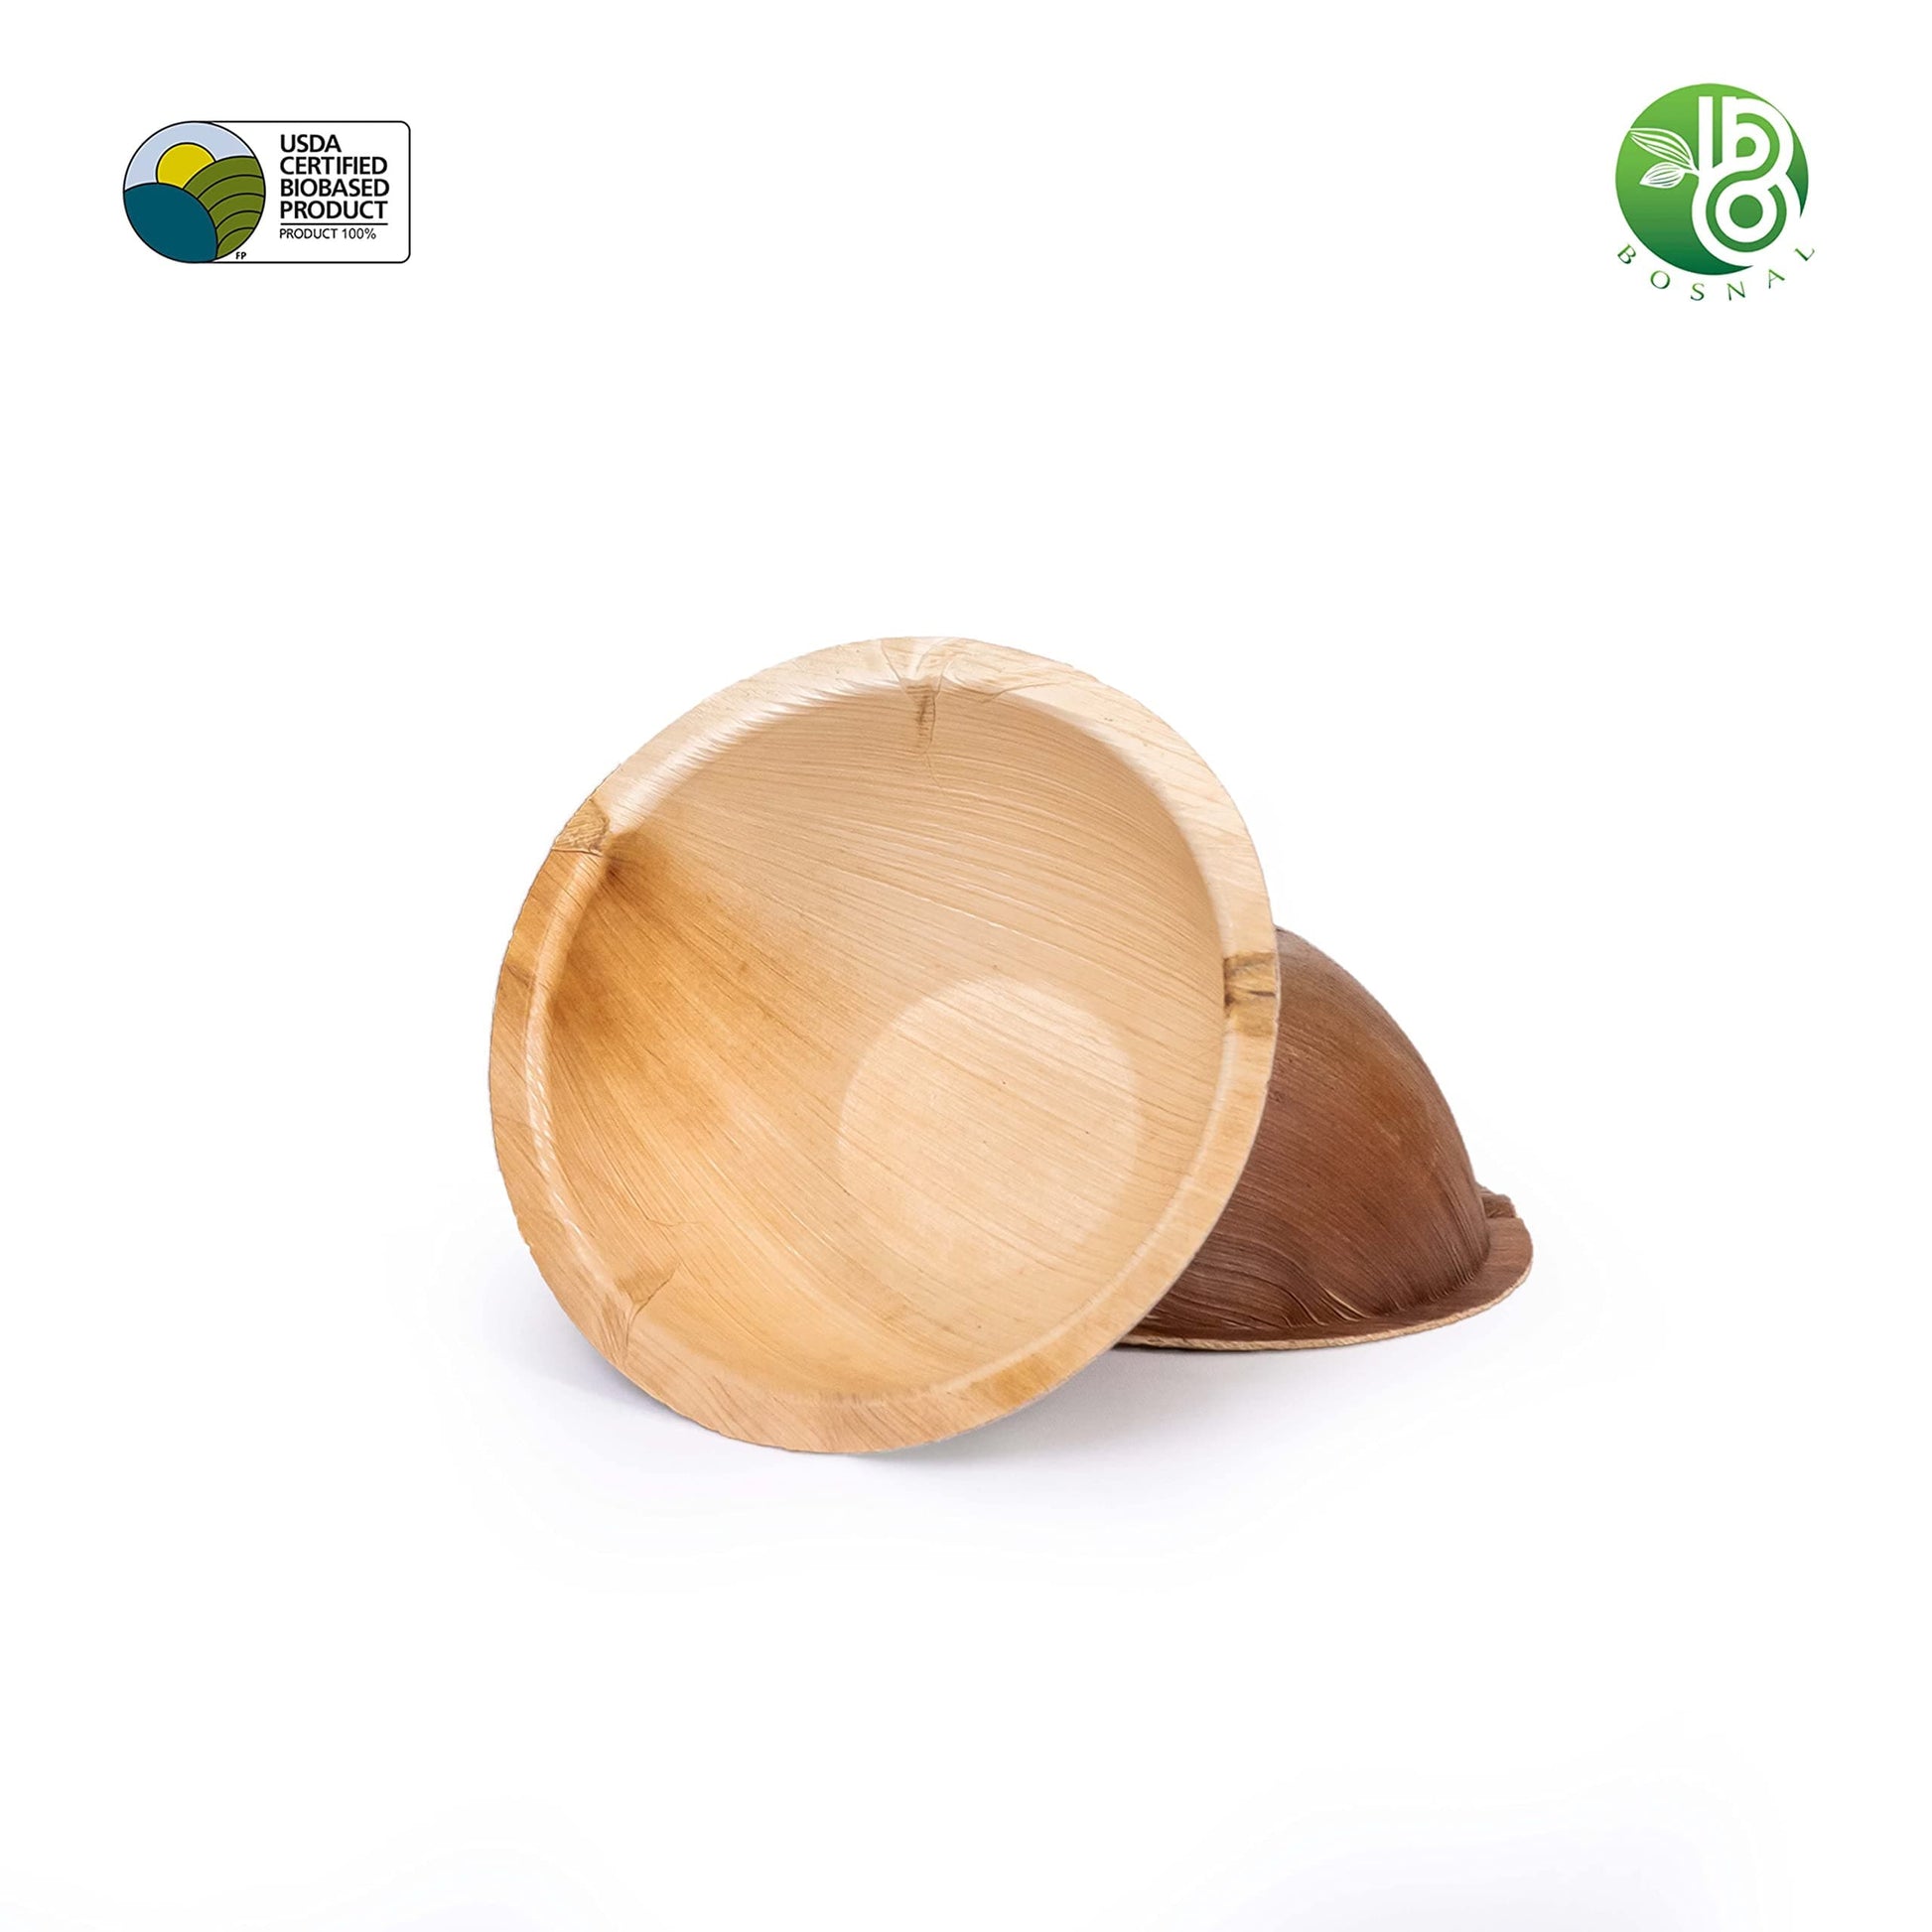 Palm Leaf Biodegradable Plates, 6 inch, Round Bowl, 25 Pcs-2